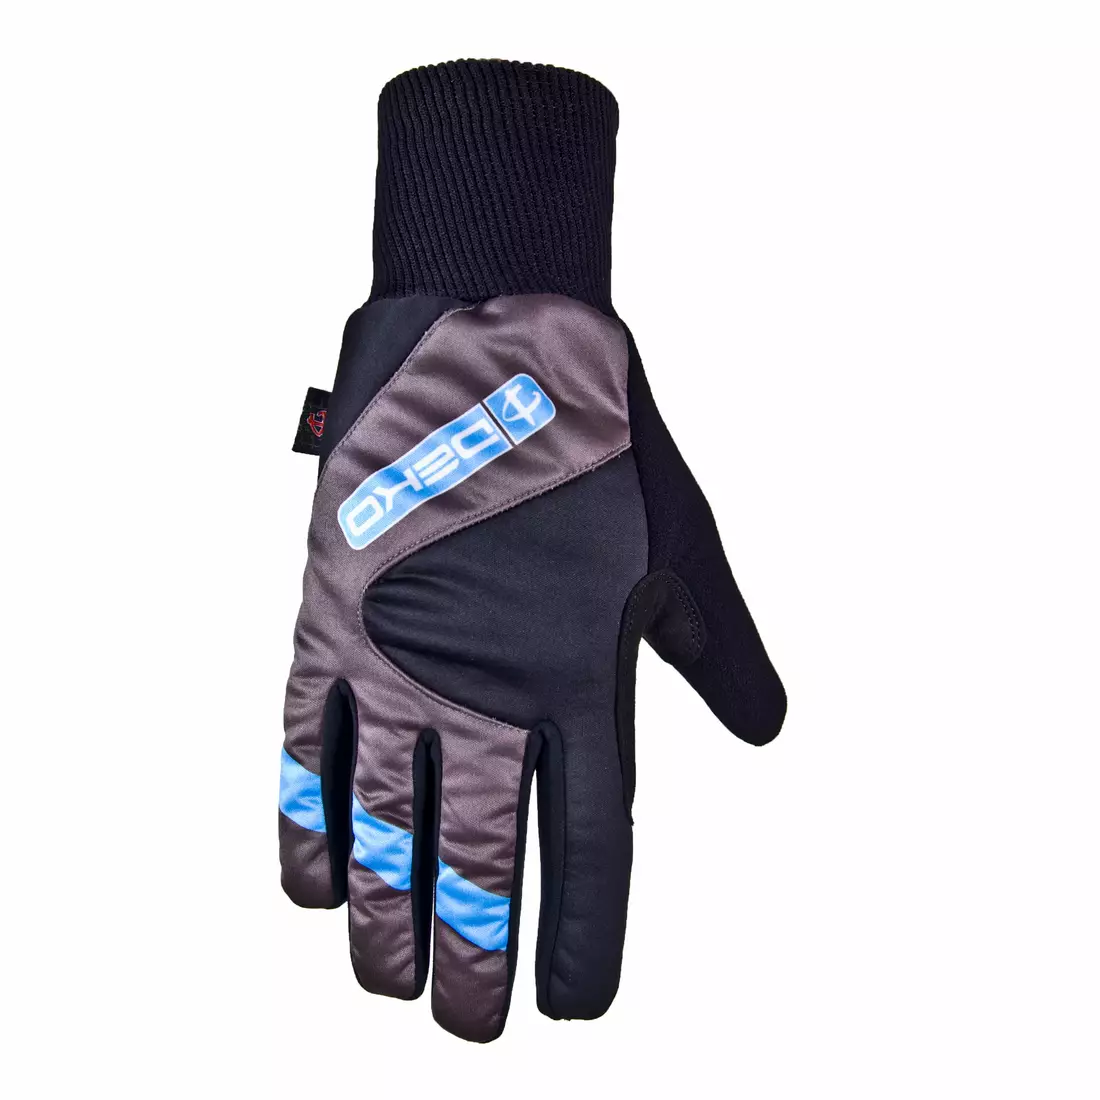 DEKO RAST winter cycling gloves black and blue DKW-910